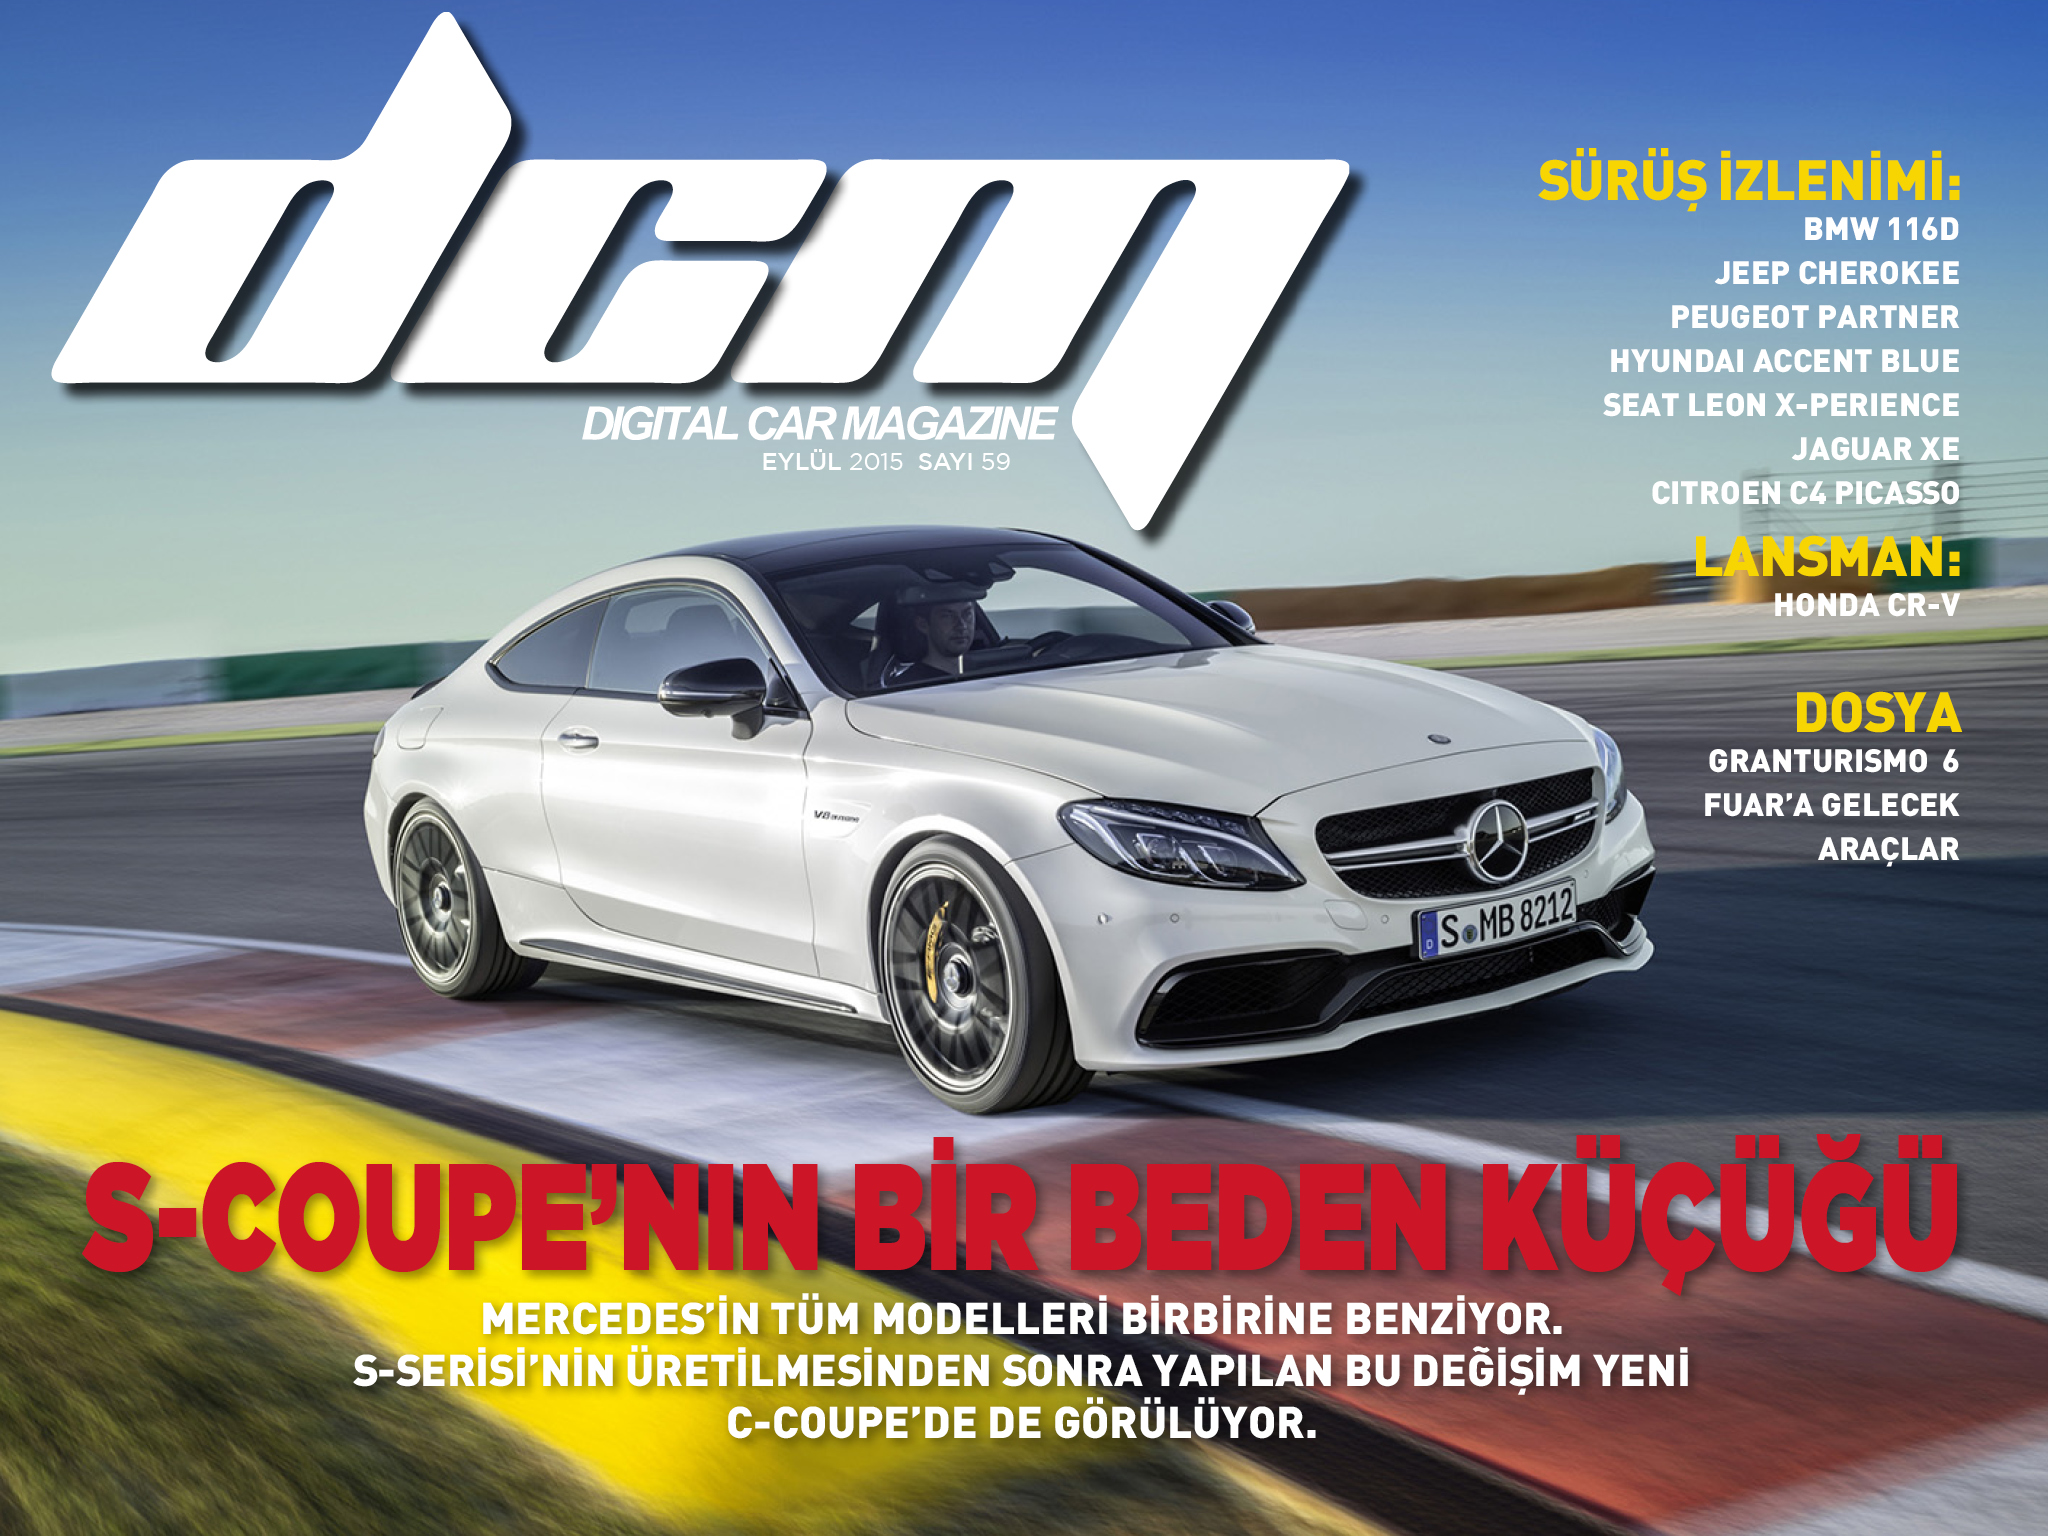 Car magazine